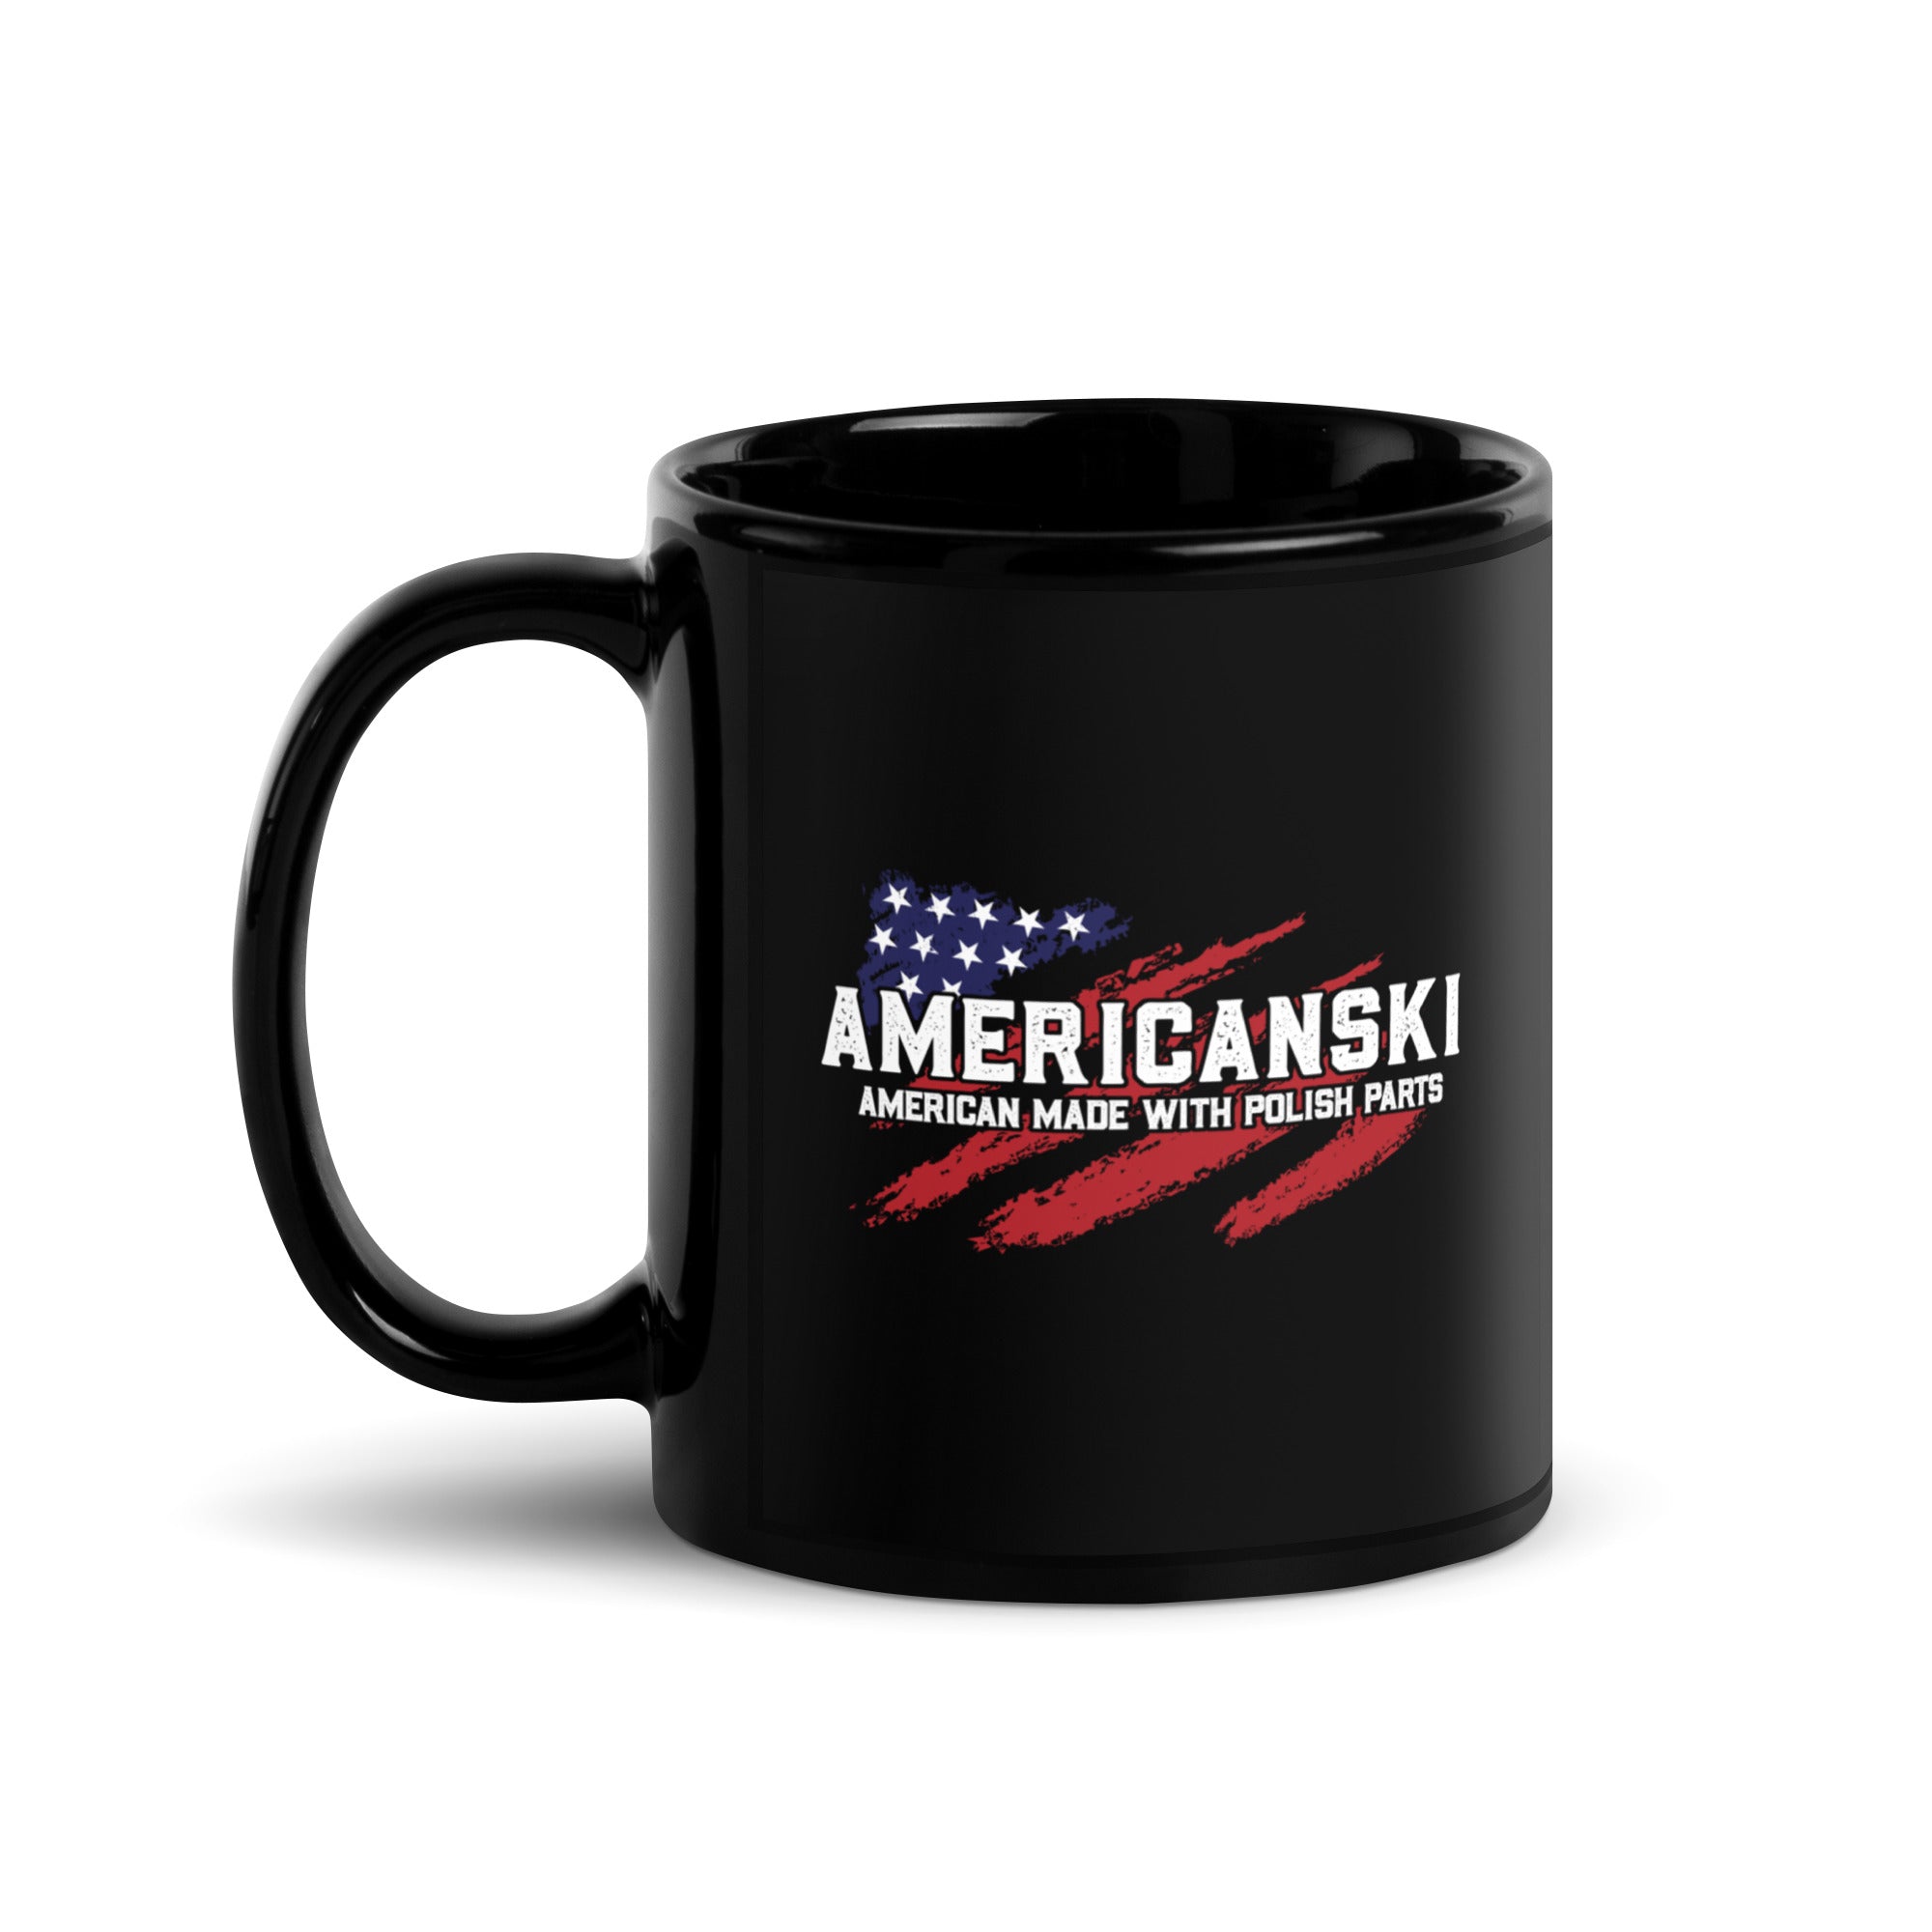 Americanski Black Glossy Mug  Polish Shirt Store 11 oz  